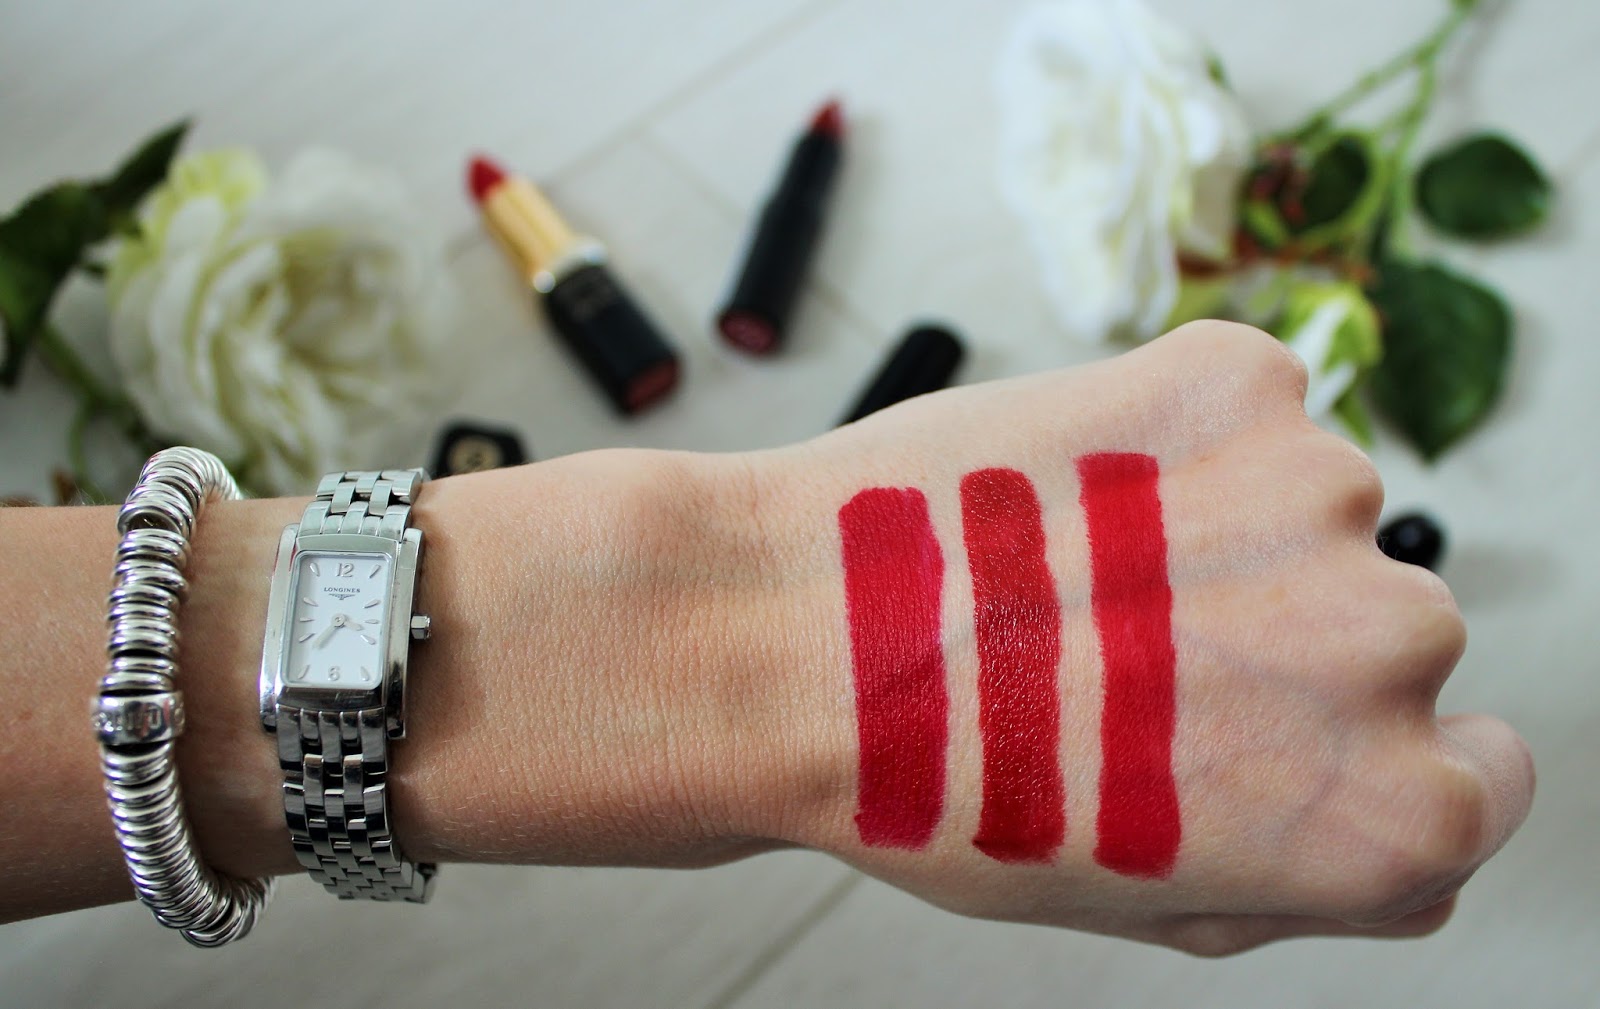 Autumn 2016 lipsticks 9 L'Oreal Blake's Red, Mac Ruby Woo, Rimmel Kate 01